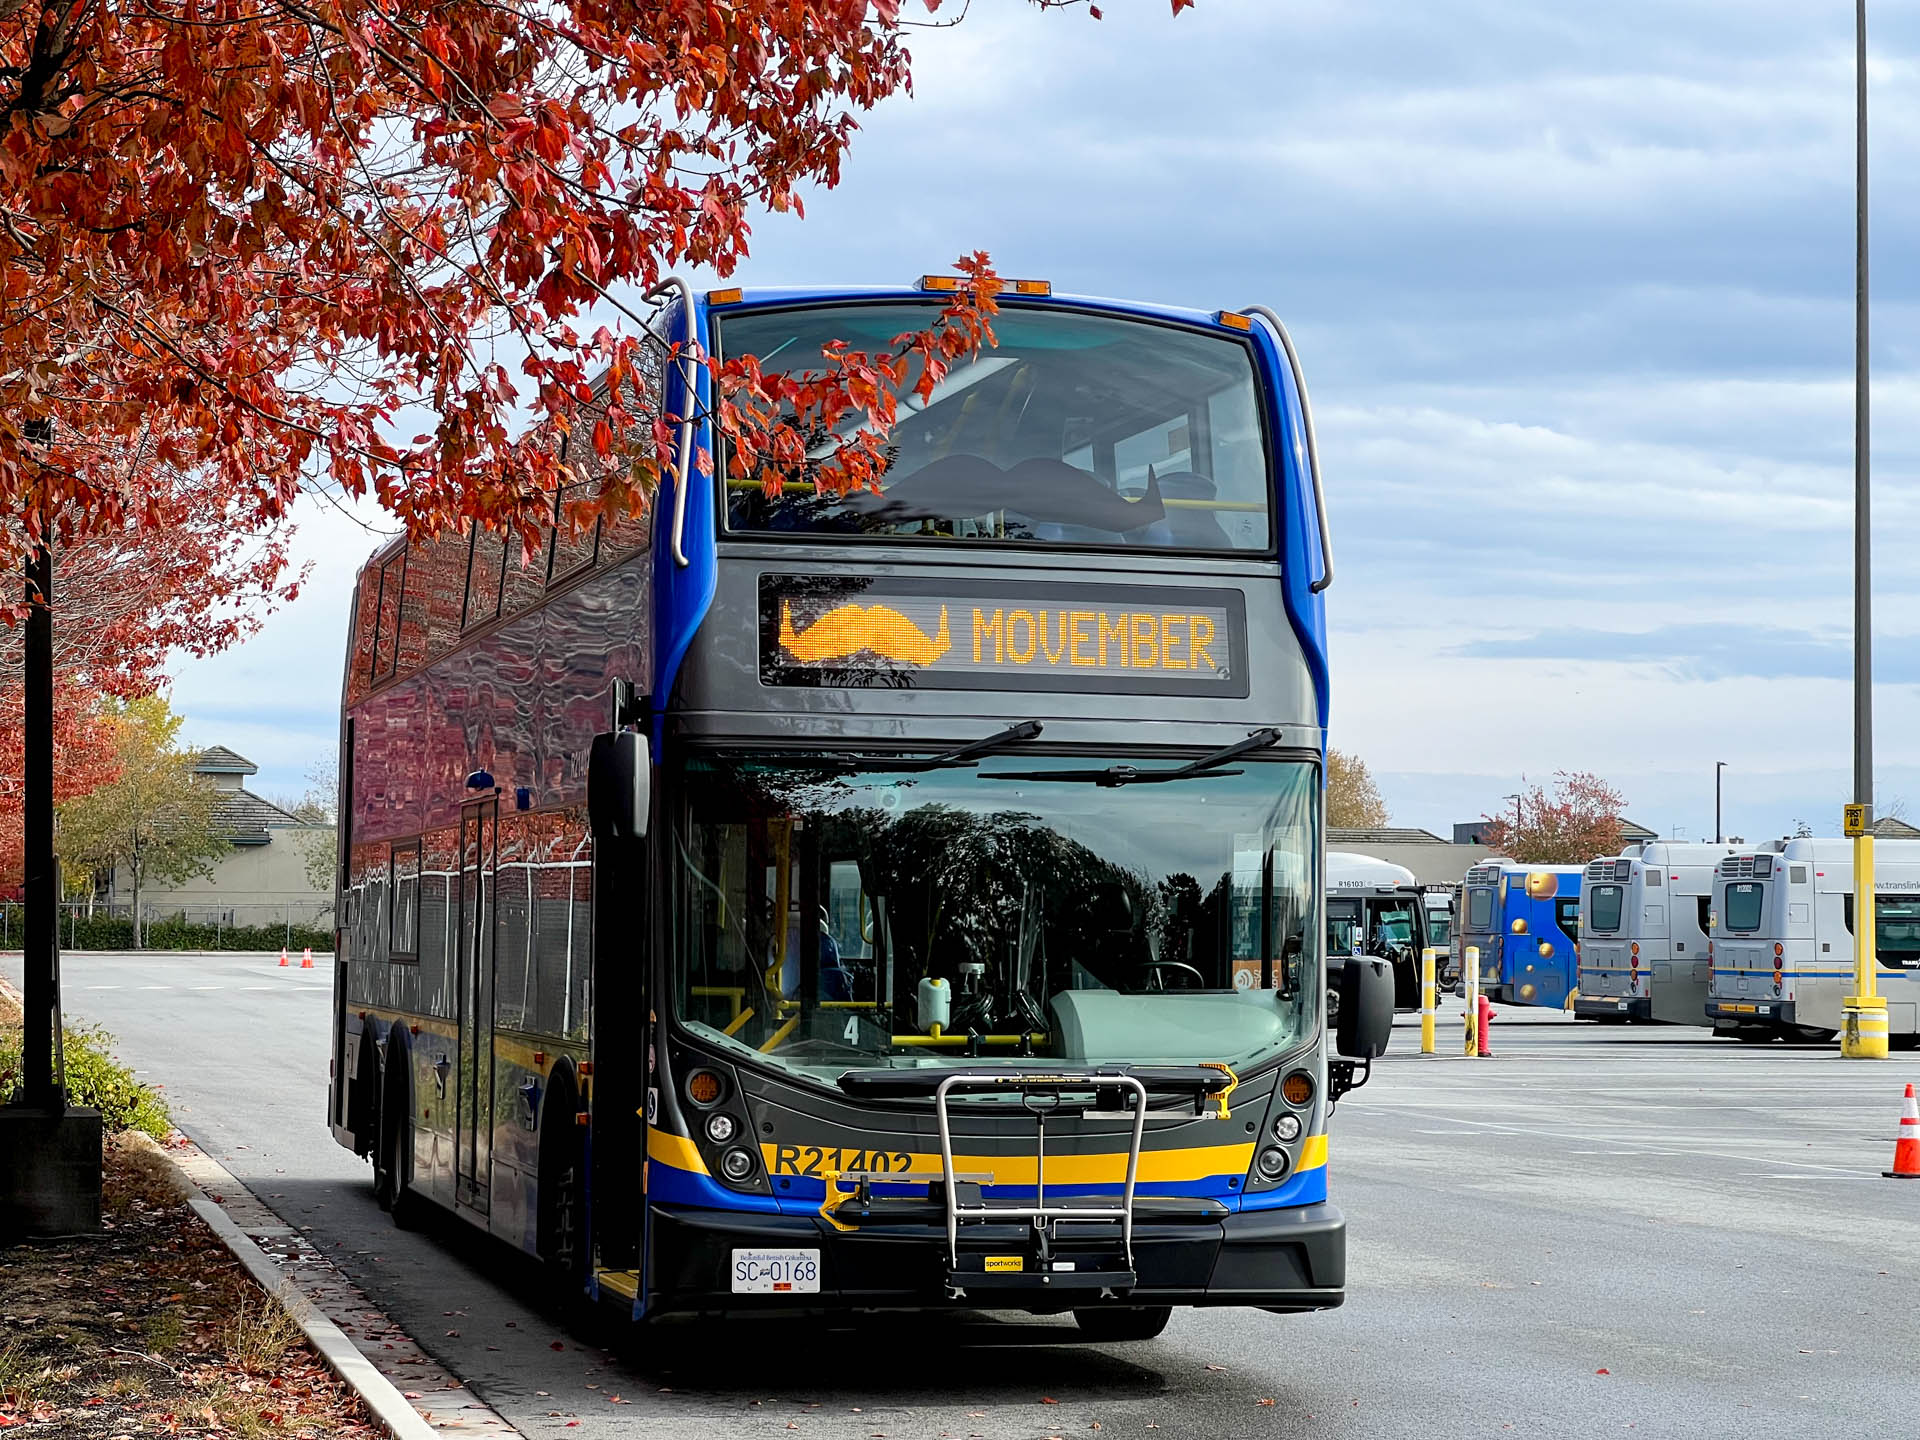 Photo of the Movember bus-stash double-decker bus